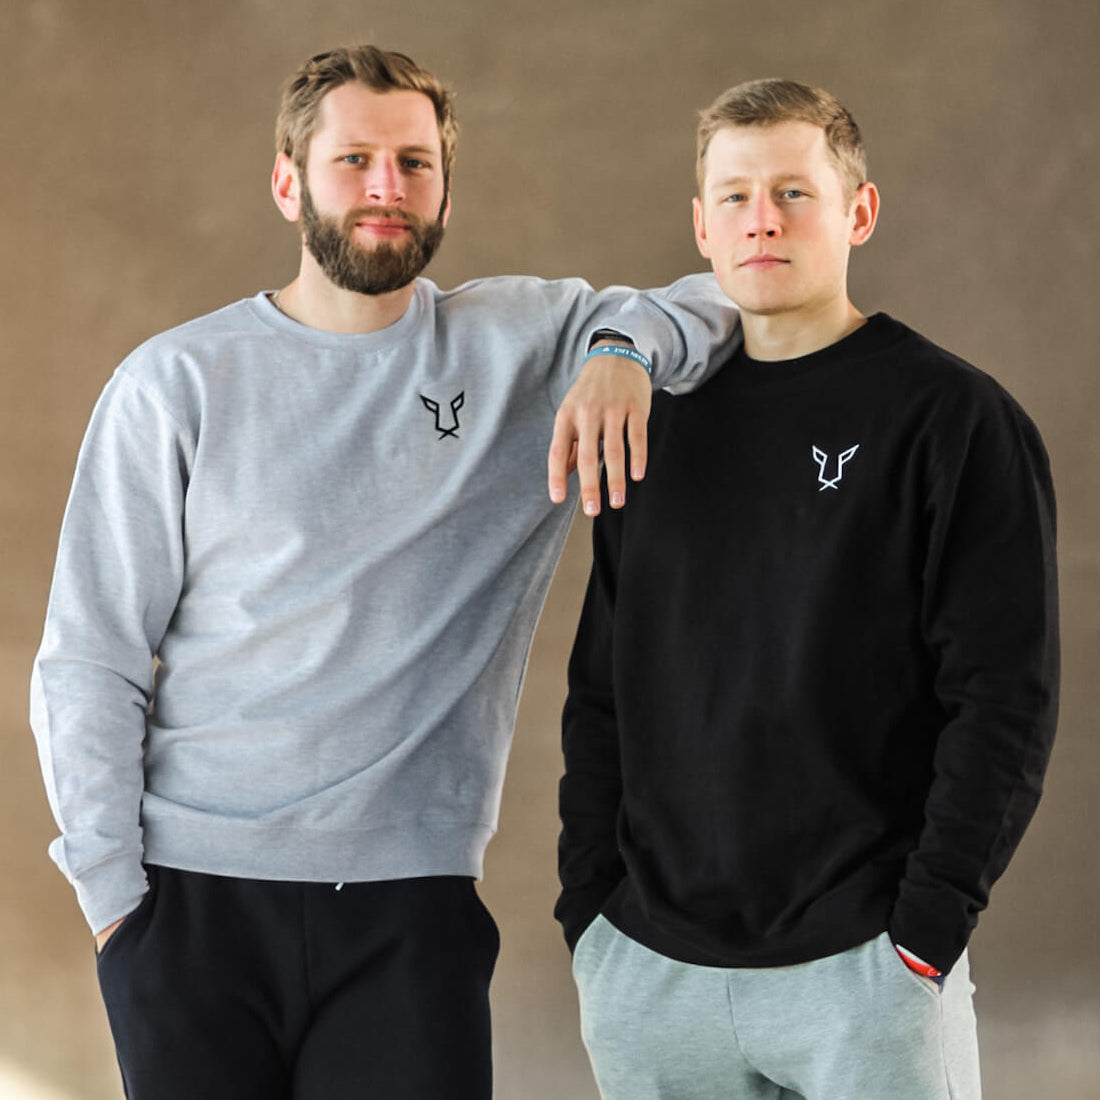 Jake & Sam Bredenbeck | Founders of Odisi Apparel wearing the Evolution Crewneck Sweatshirt Collection